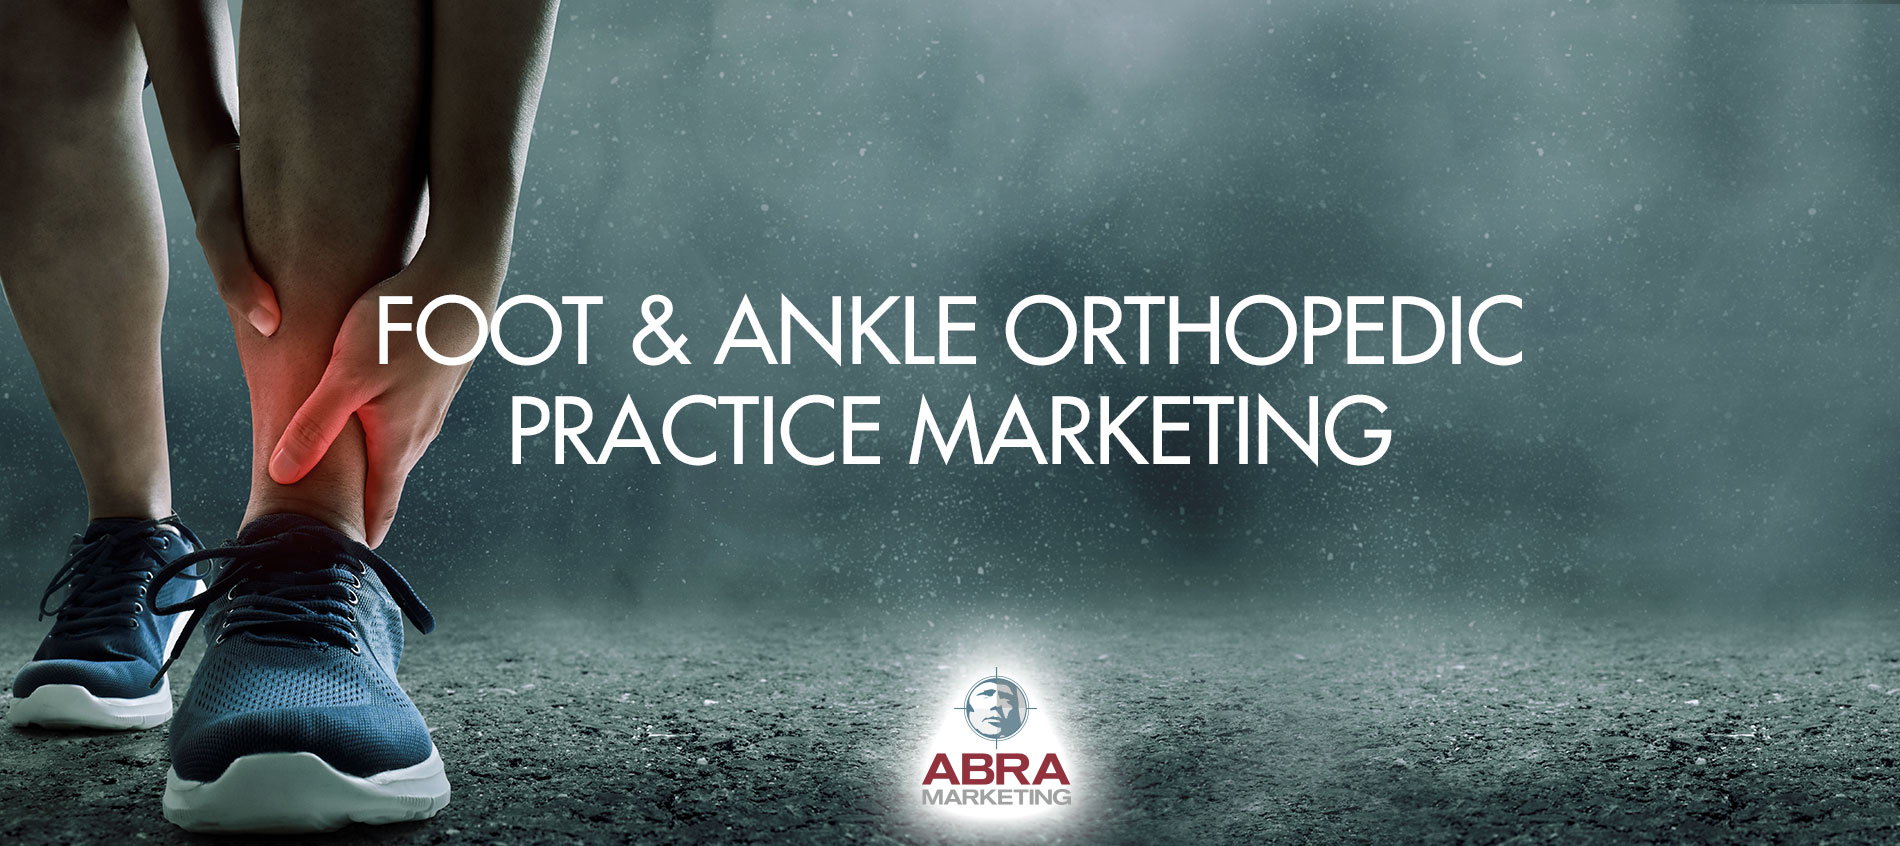 Foot & Ankle Orthopedic Practice Marketing